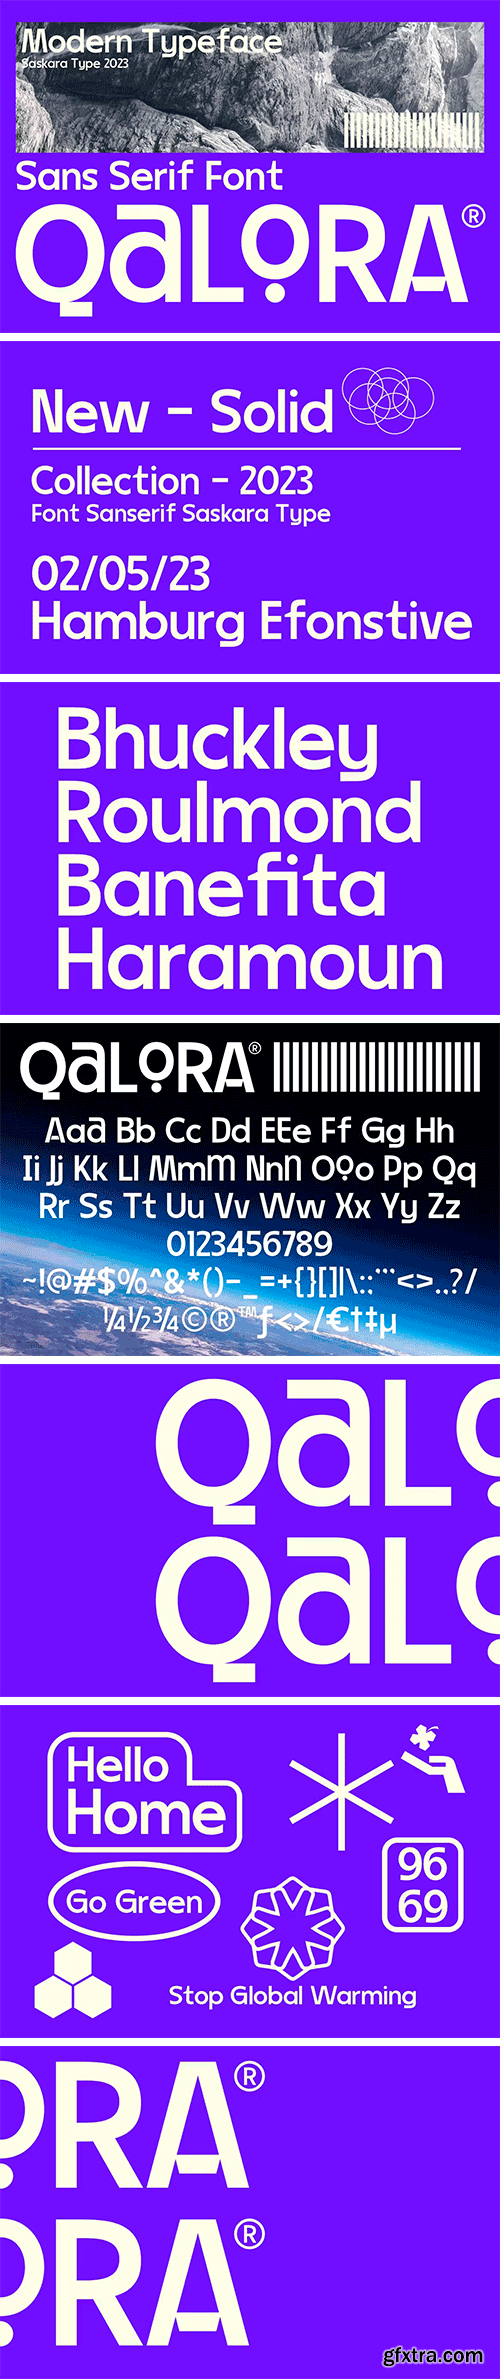 Qalora - Sans Serif Font